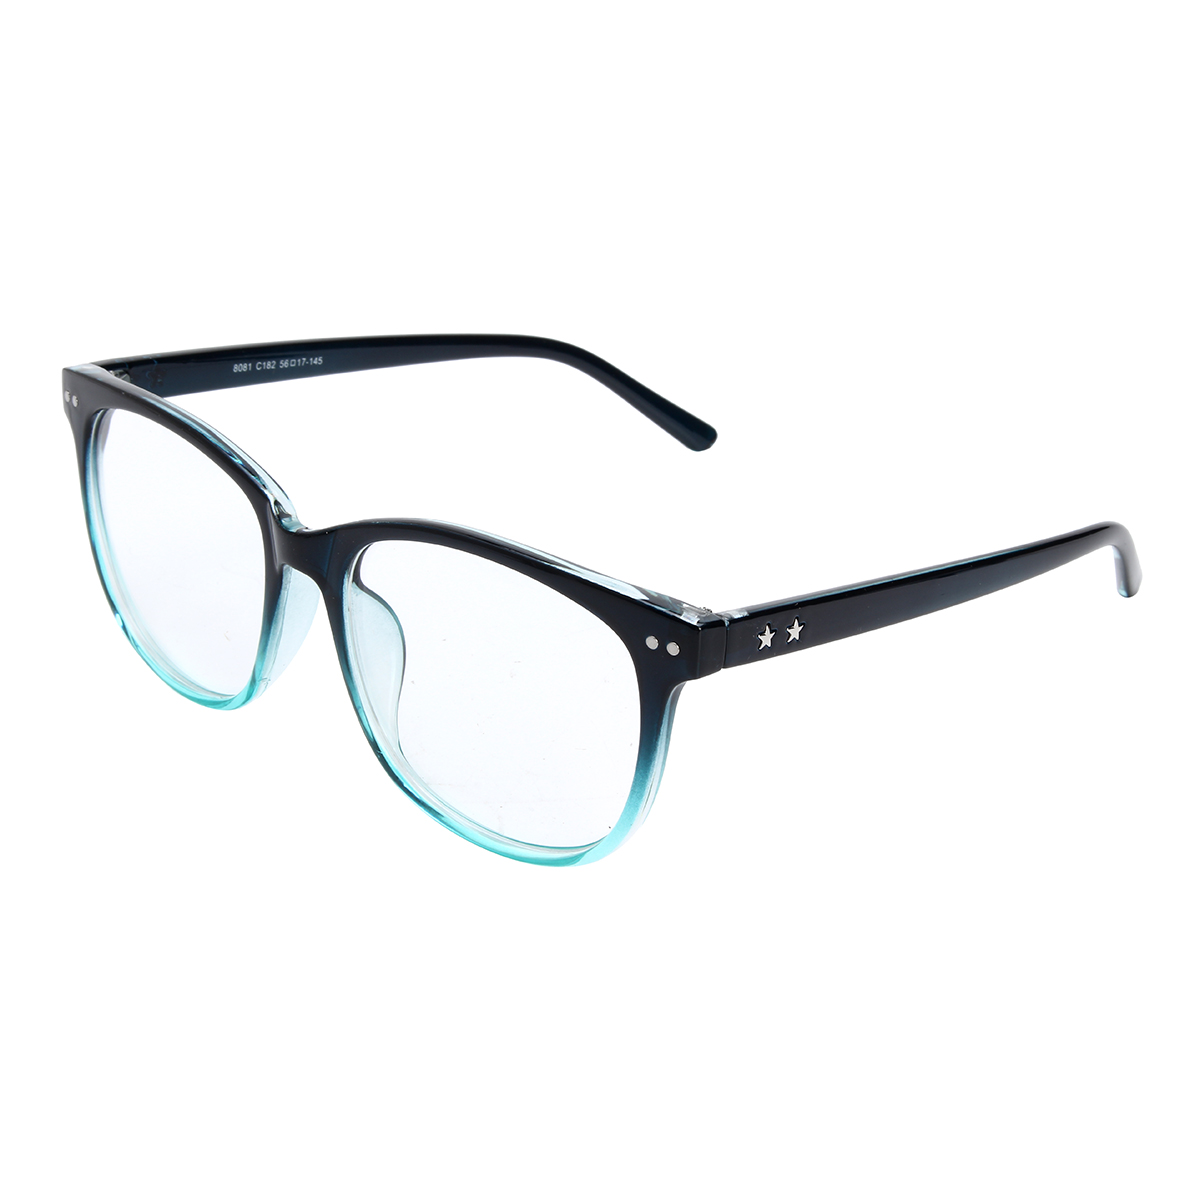 Eyewear - Fashion Spectacles Eyeglasses Full Rim Frames ...
